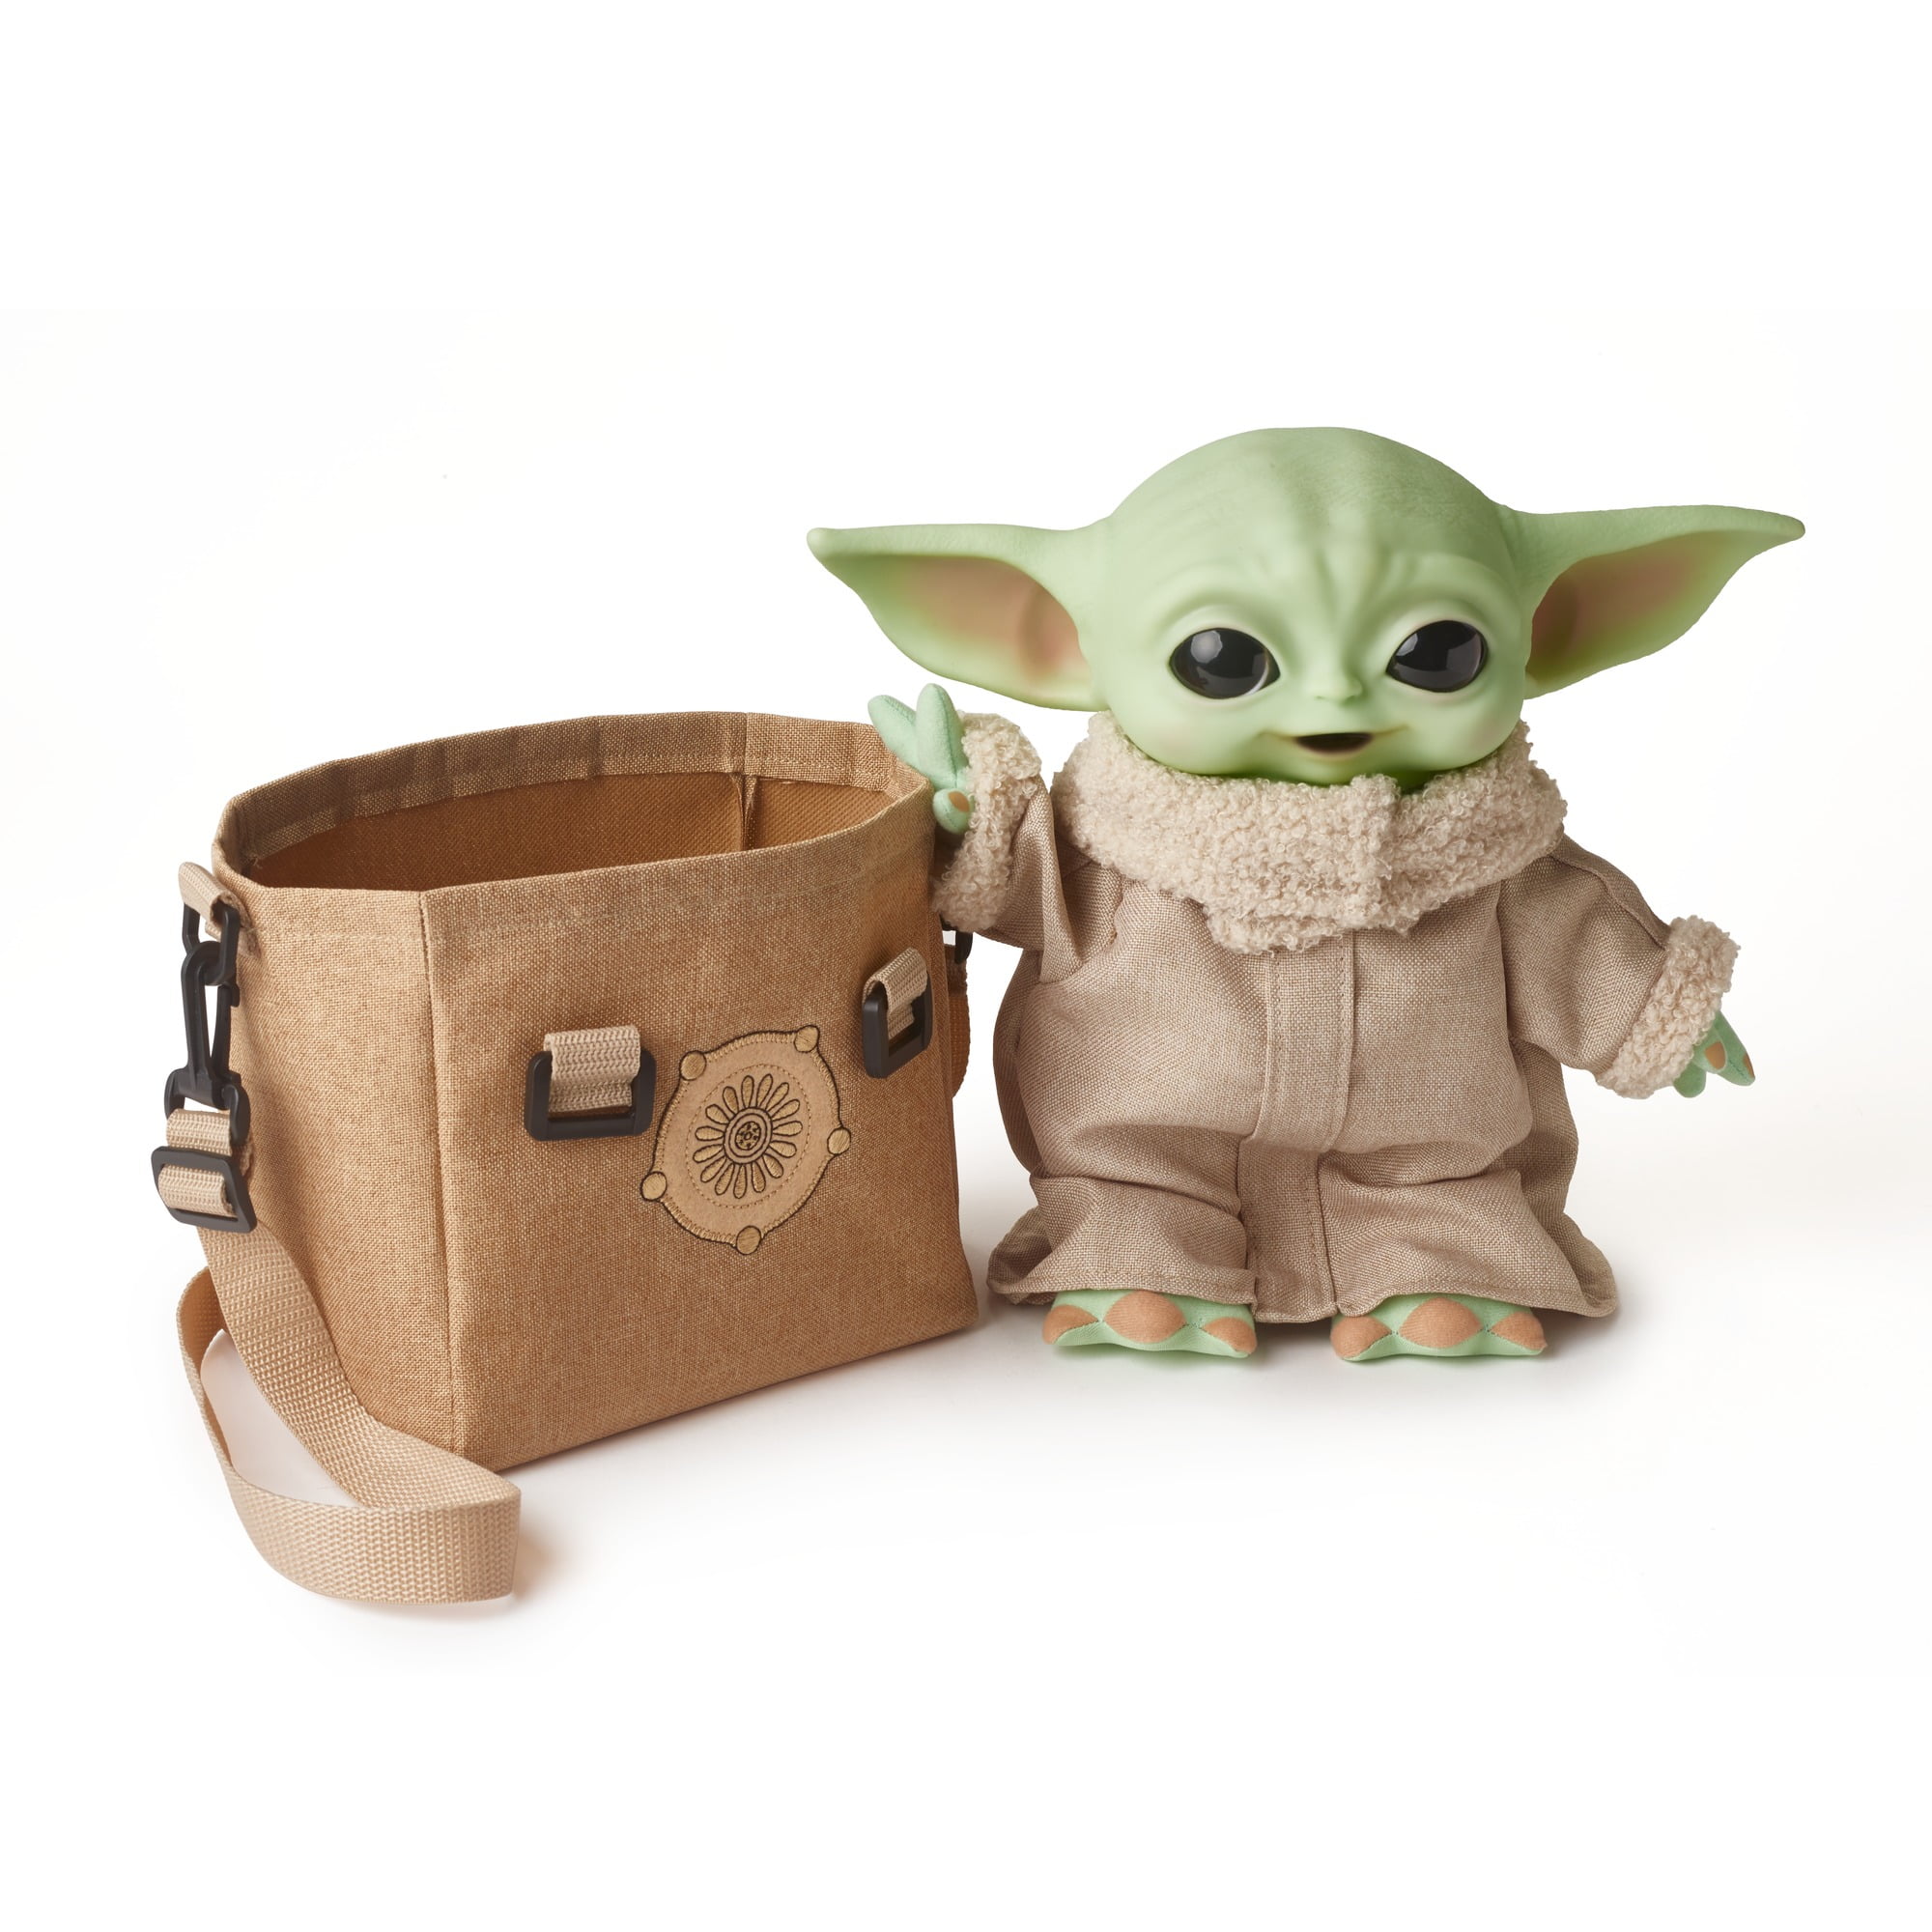 Yoda The Mandalorian Plush Stuffed Animal 